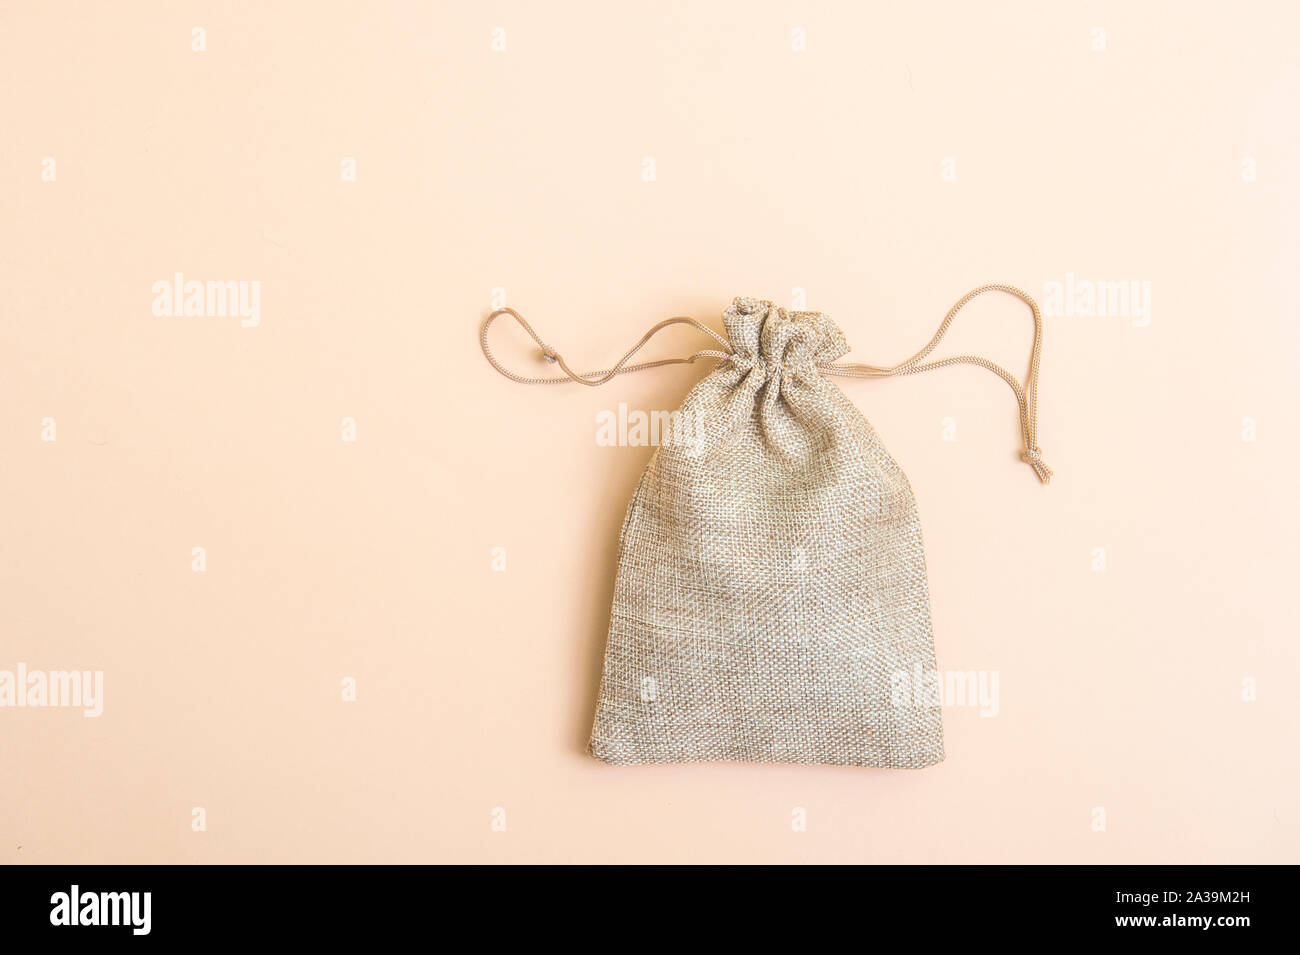 Money bag on light beige natural background Stock Photo